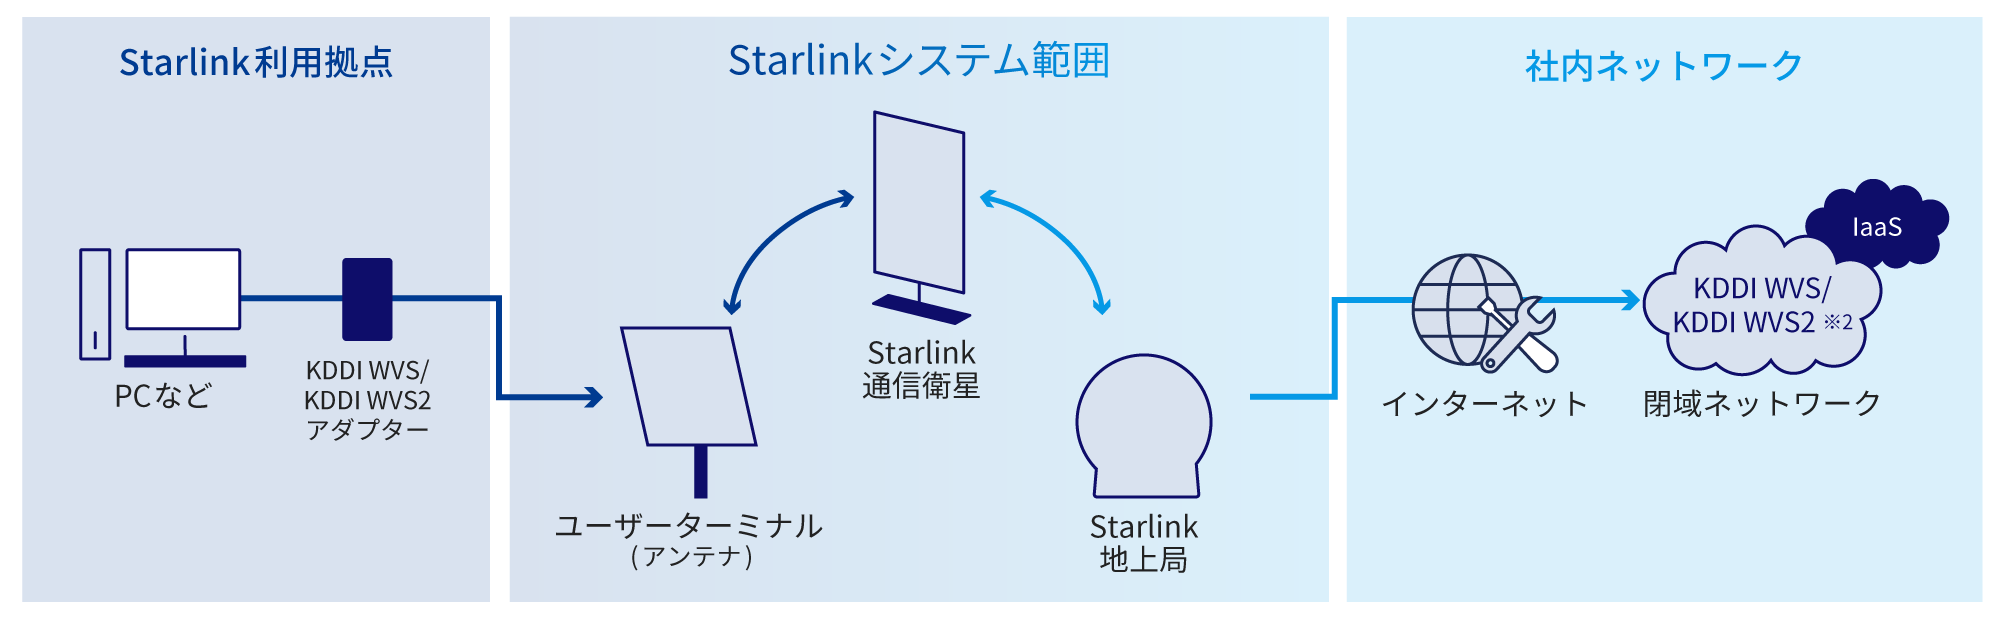 Starlink利用拠点（PCなど→KDDI WVS/KDDI WVS2アダプター）→Starlinkシステム範囲（ユーザーターミナル(アンテナ)↔Starlink通信衛星↔Starlink地上局）→社内ネットワーク